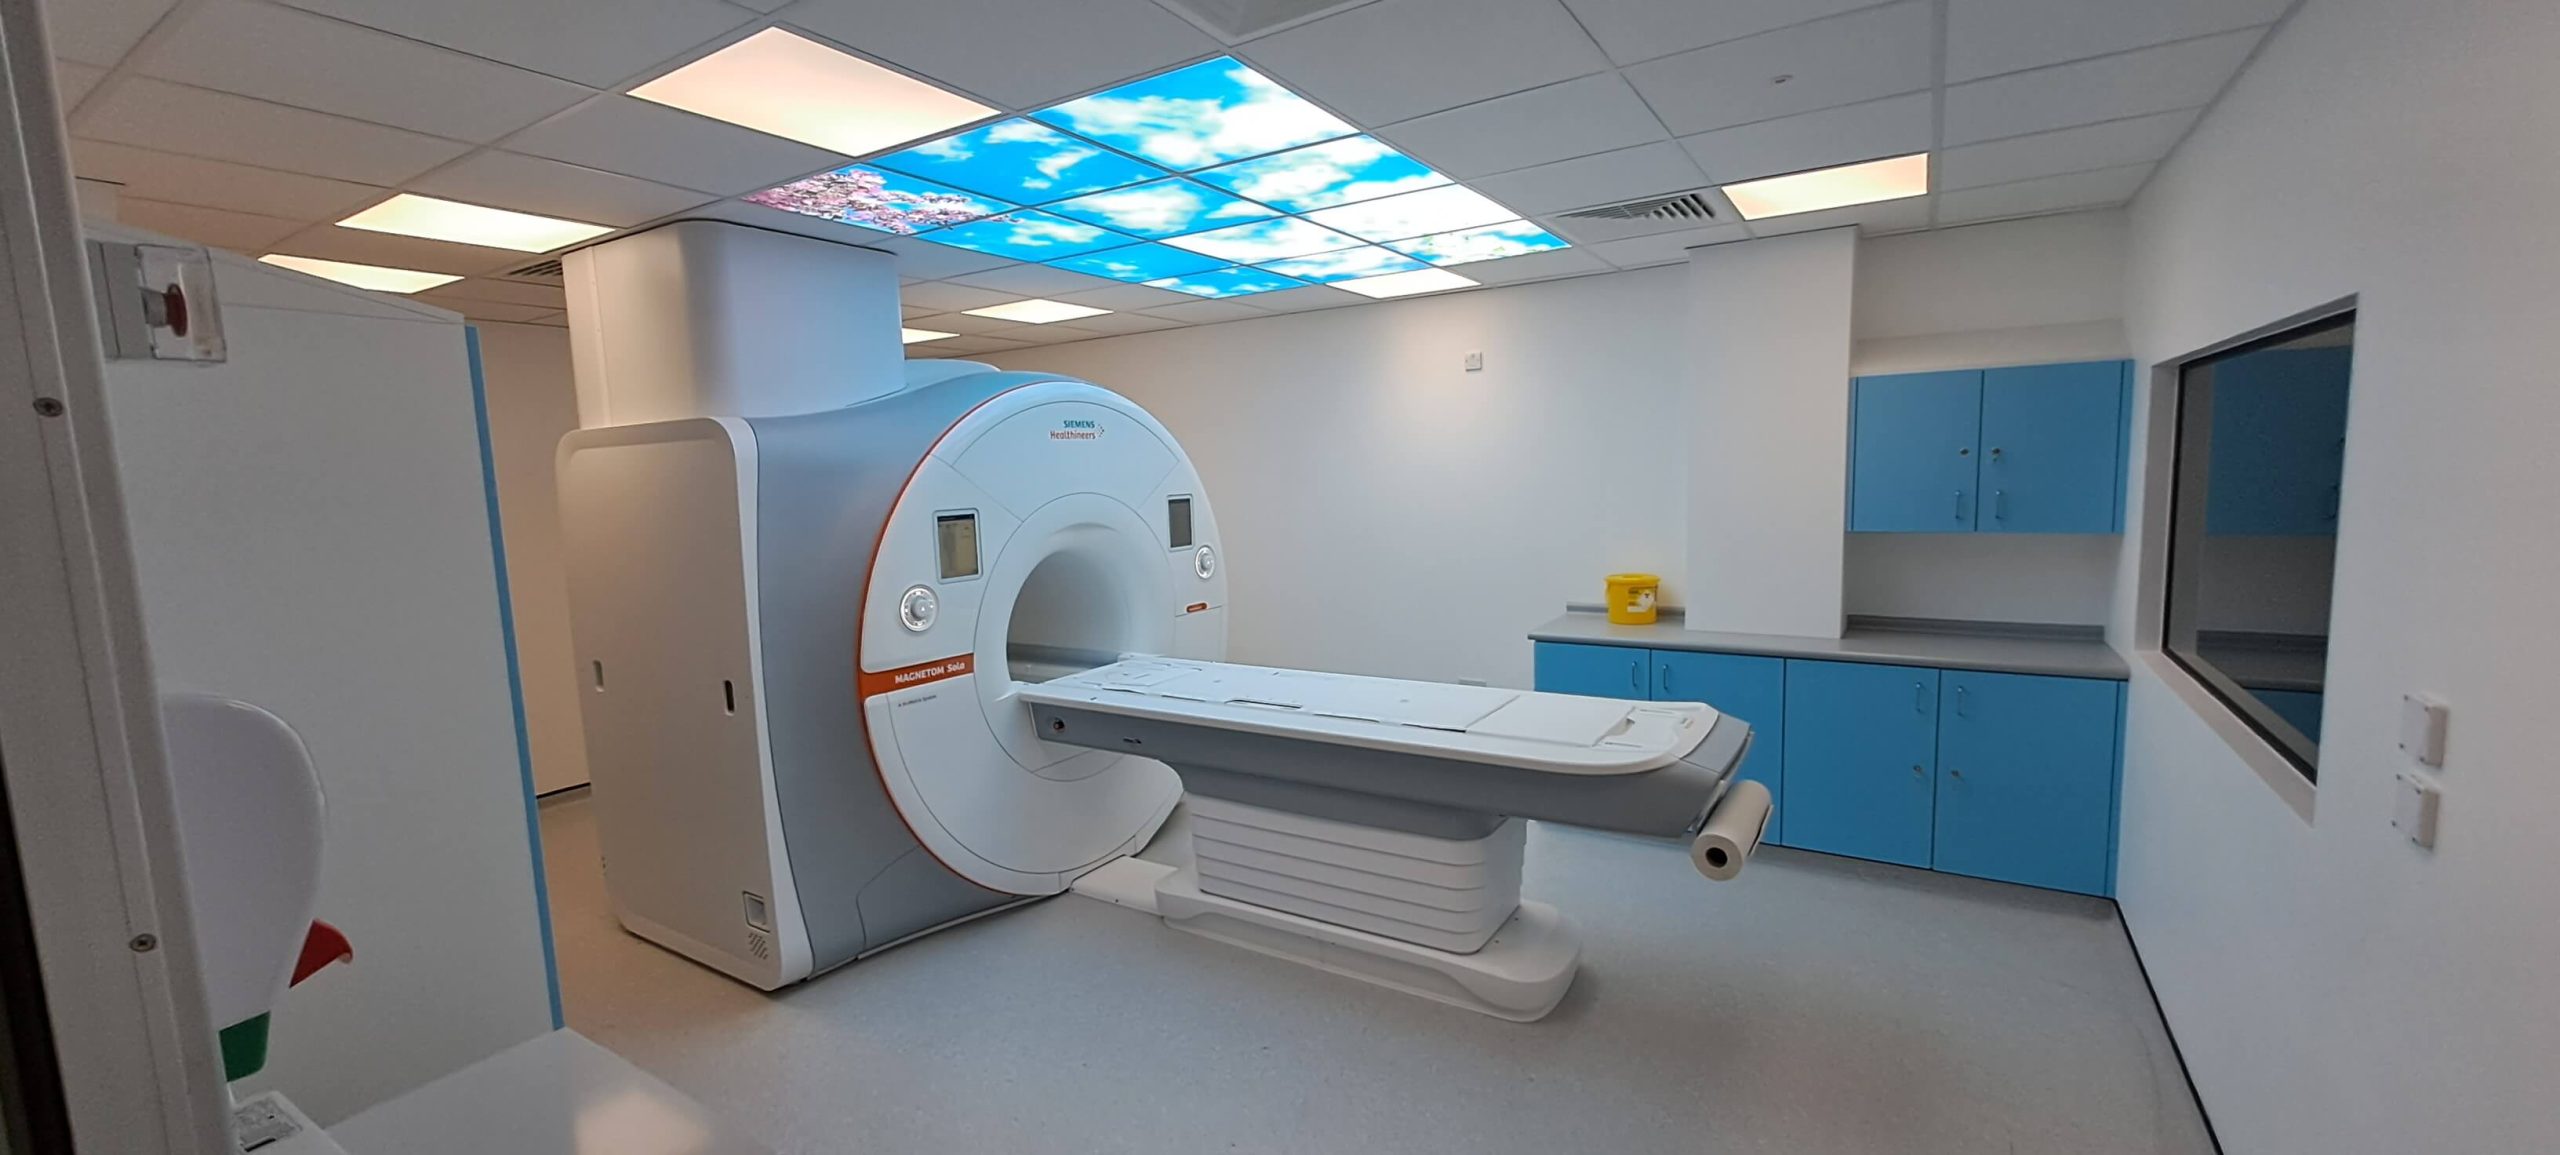 Finchley Memorial Hospital MRI Suite 2